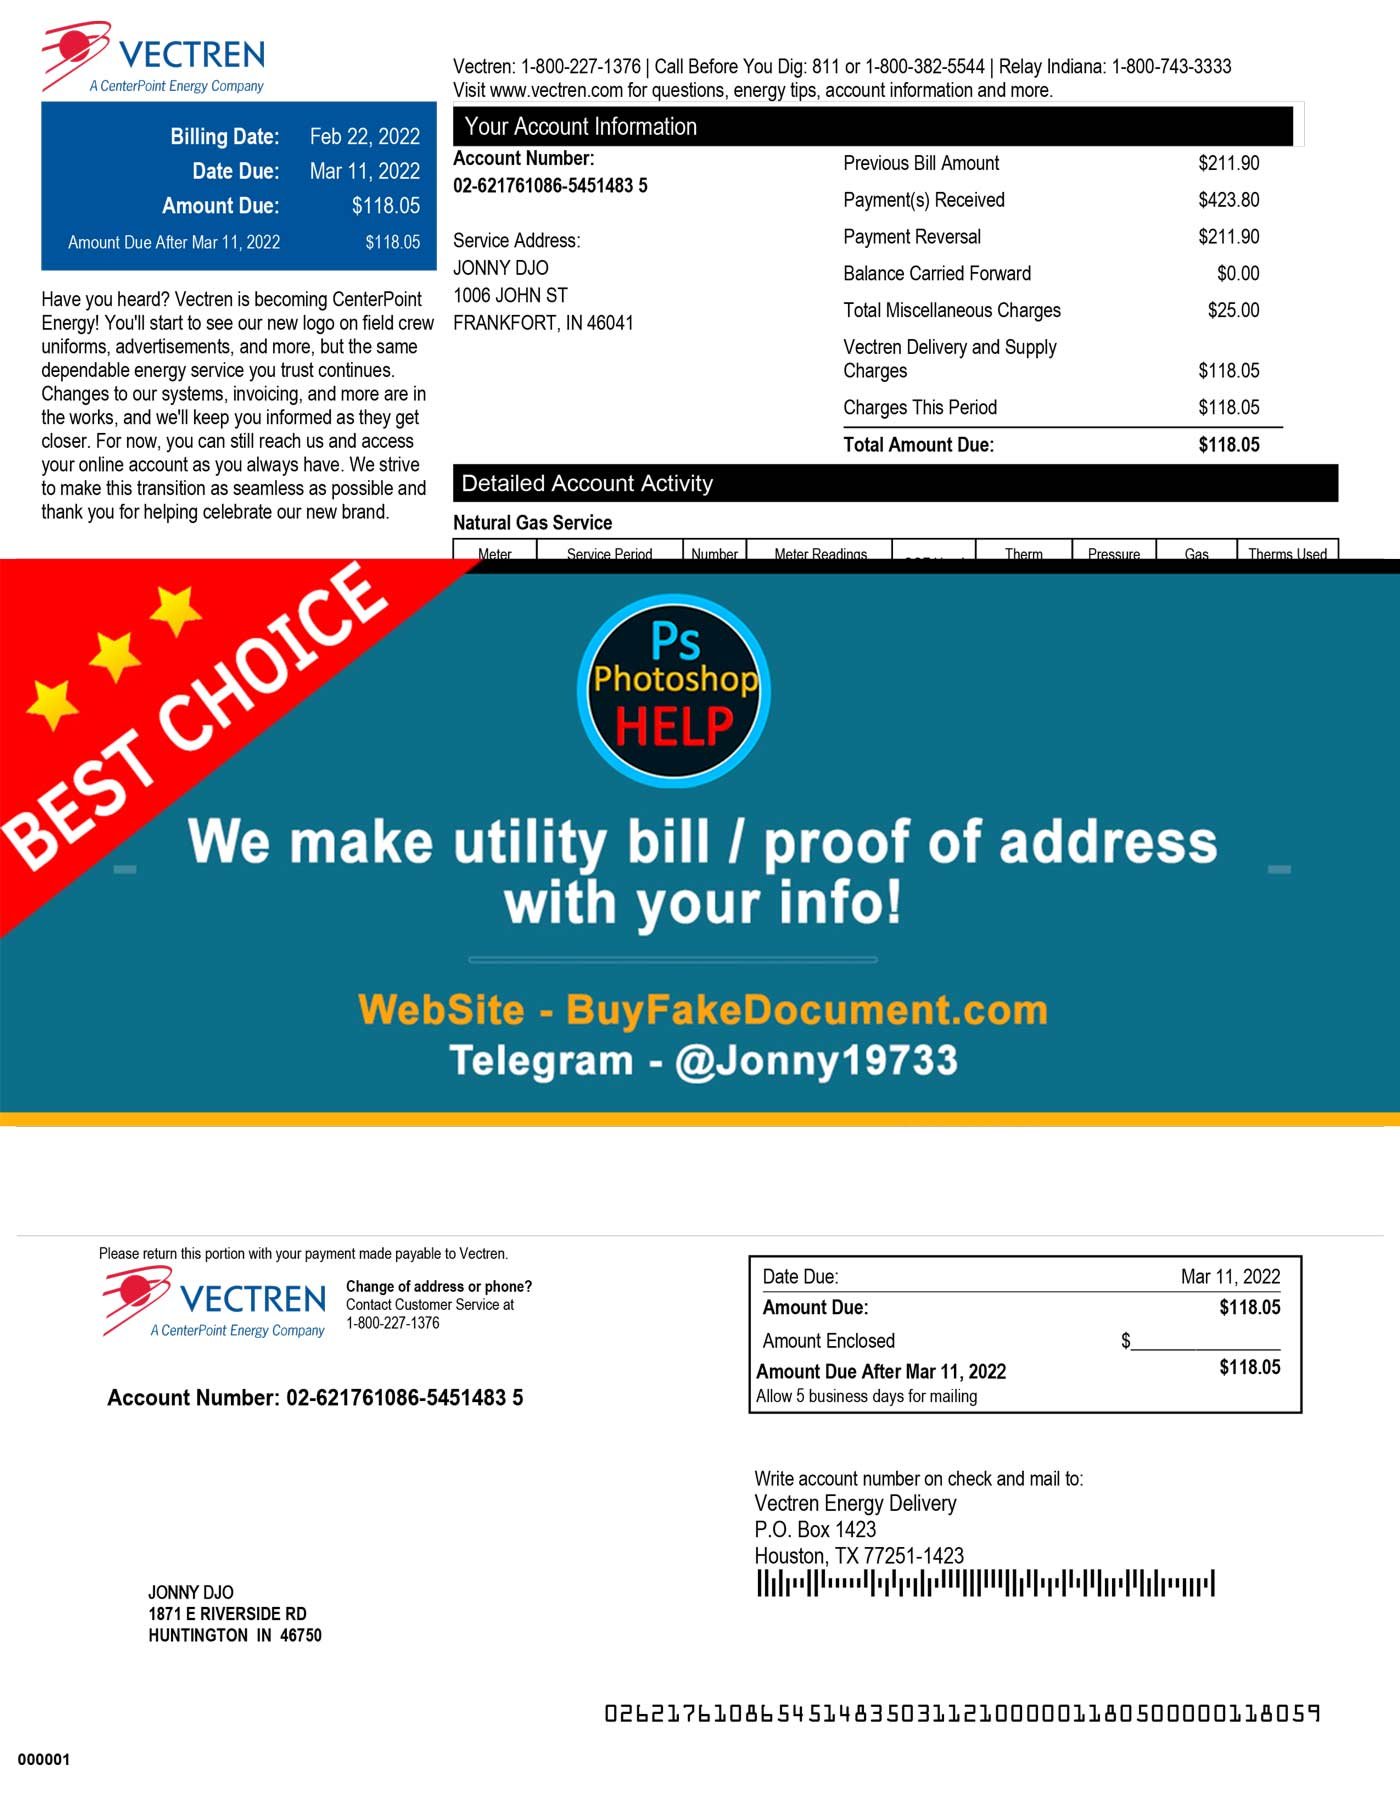 New Utility Bill Vectren CenterPoint Energy Fake Utility bill